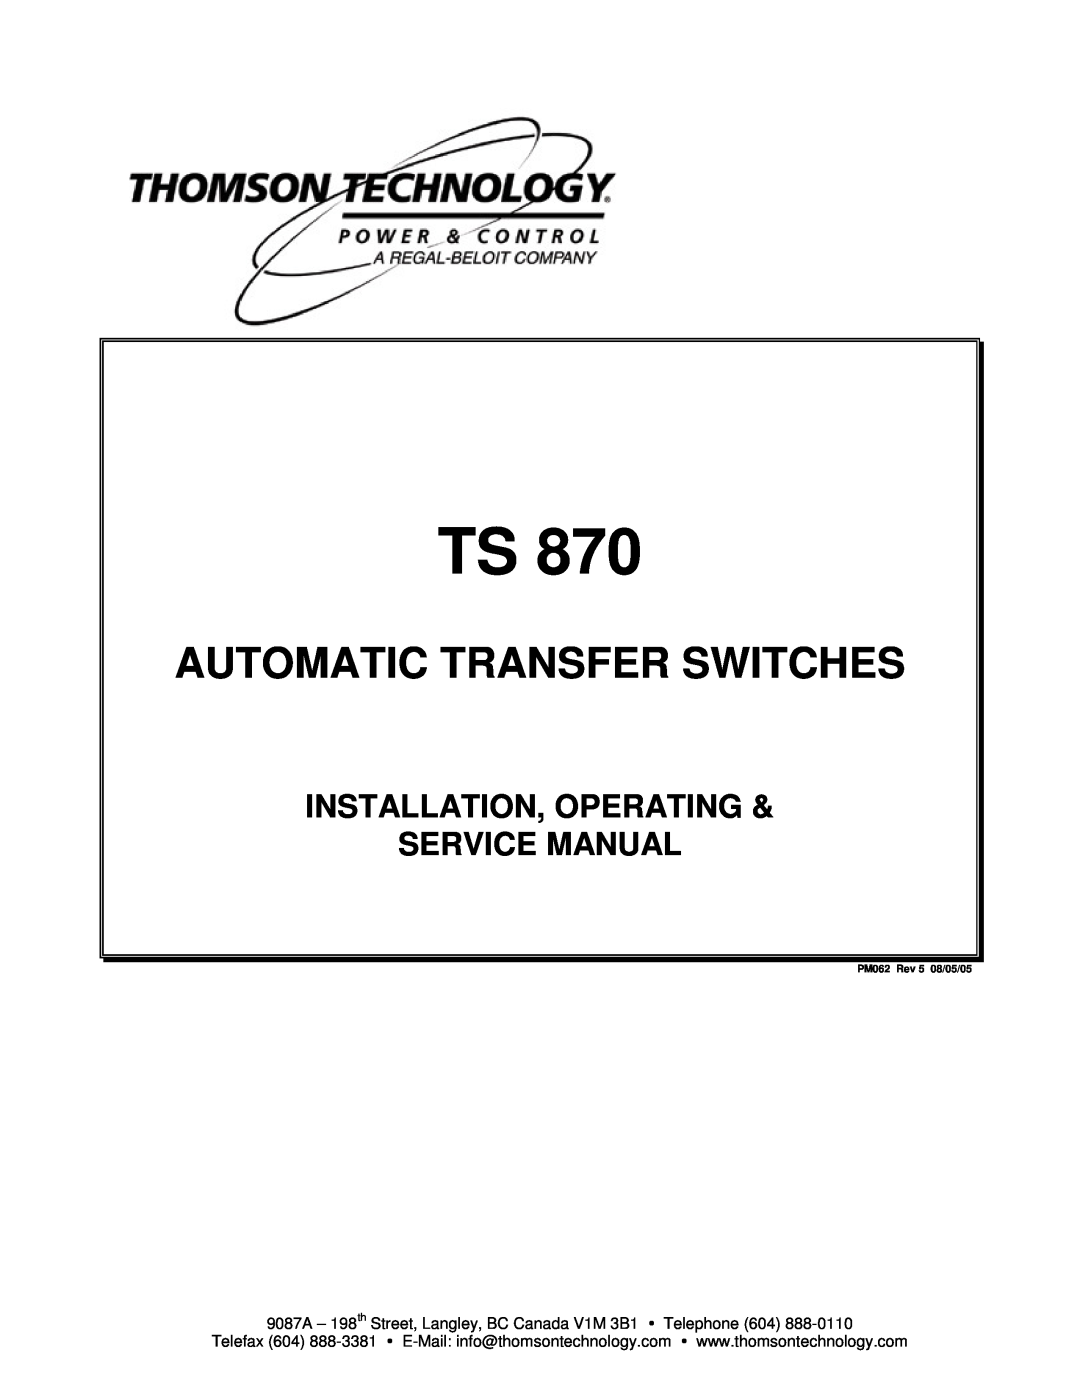 Technicolor - Thomson TS 870 service manual Automatic Transfer Switches, Installation, Operating Service Manual 